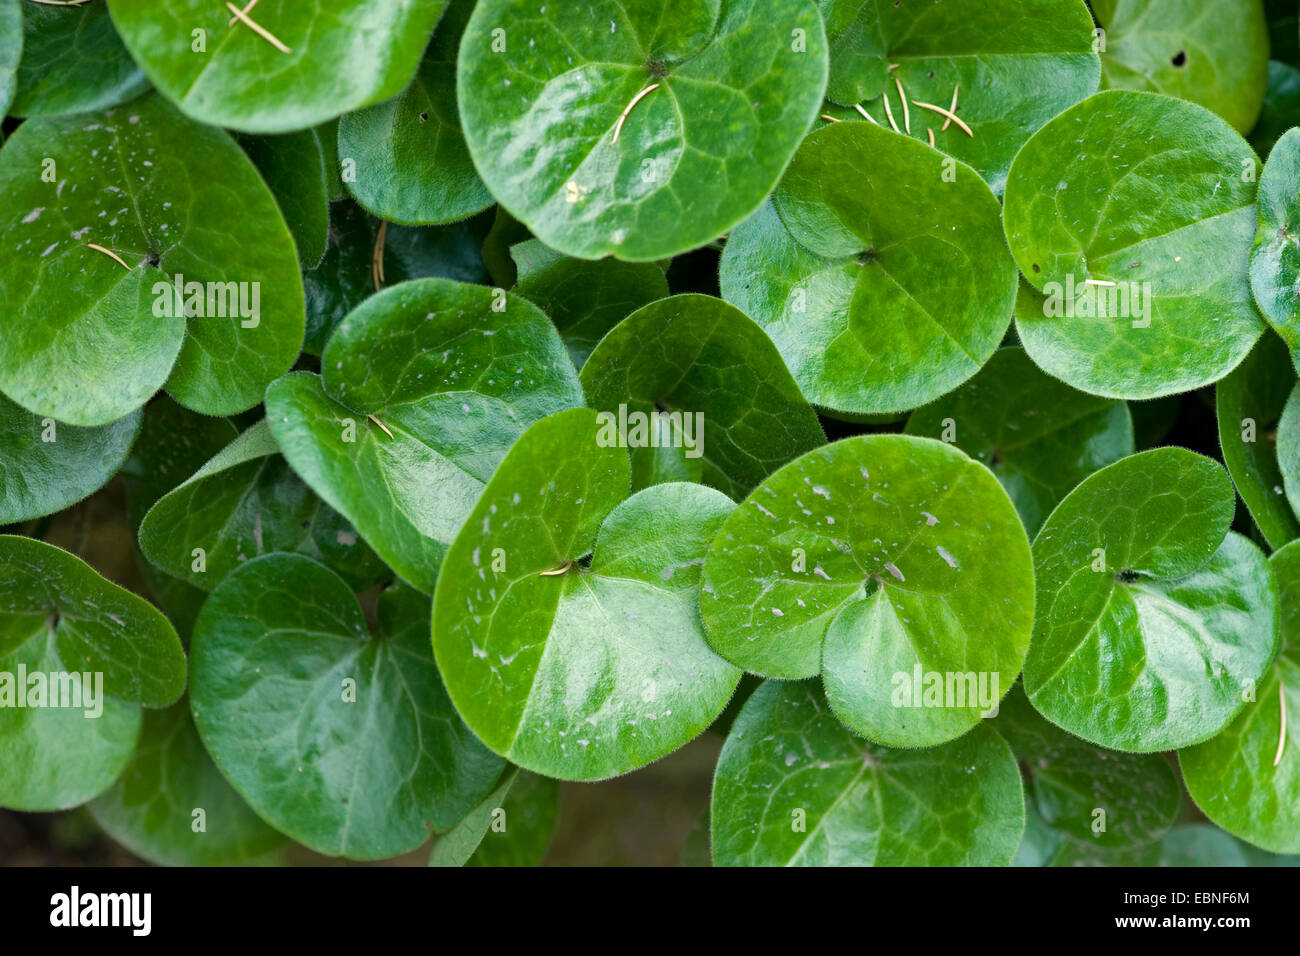 asarabacca (Asarum europaeum), leaves, Germany Stock Photo